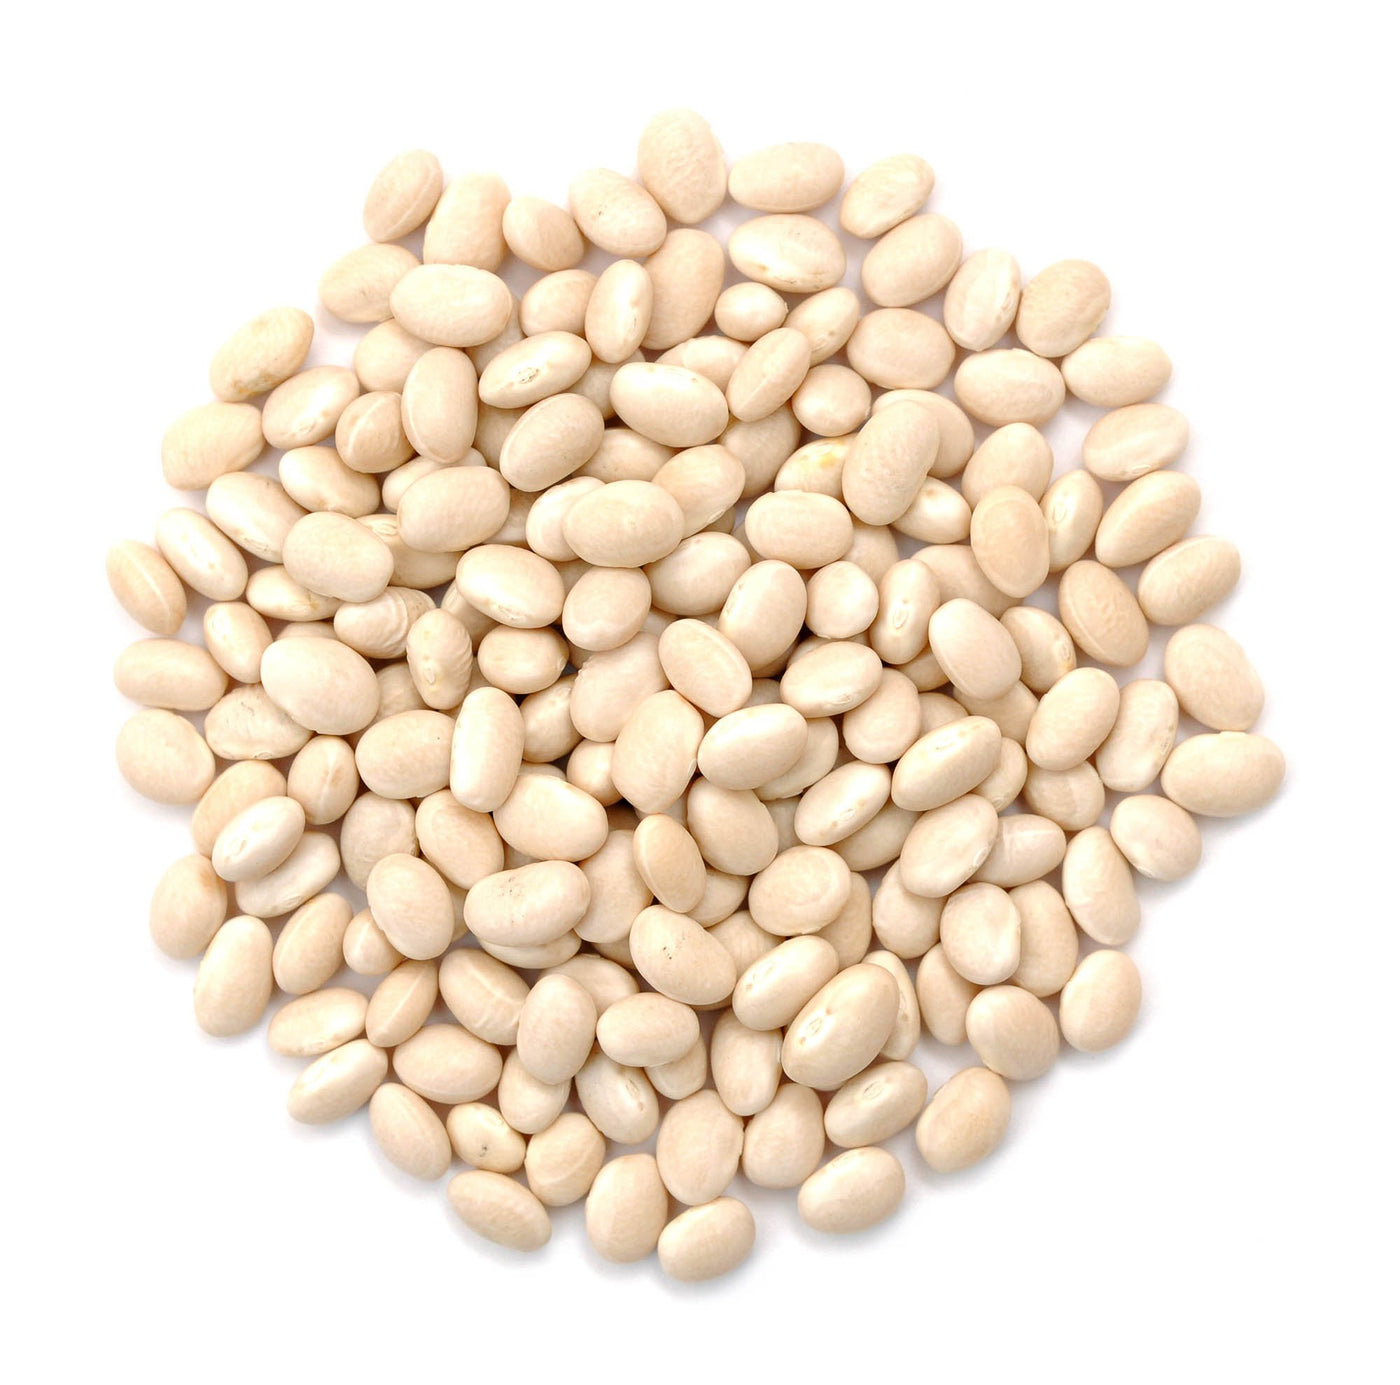 Dark Red Kidney Beans, Organic- 25 lb. Bag